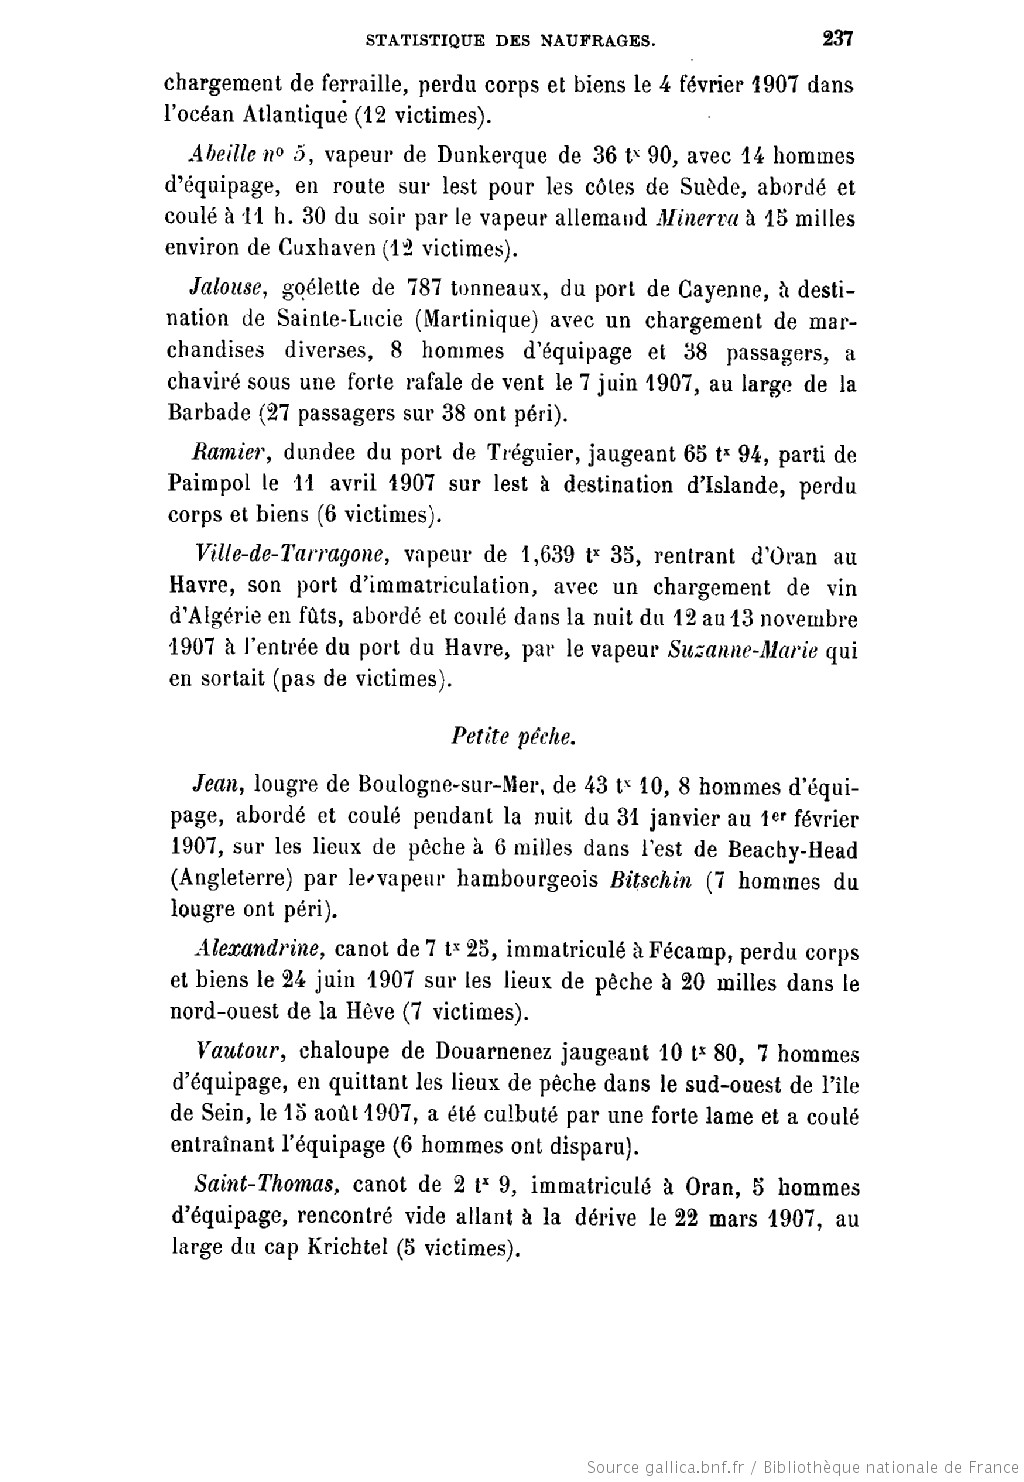 Revue maritime (Paris) Source: gallica.bnf.fr 